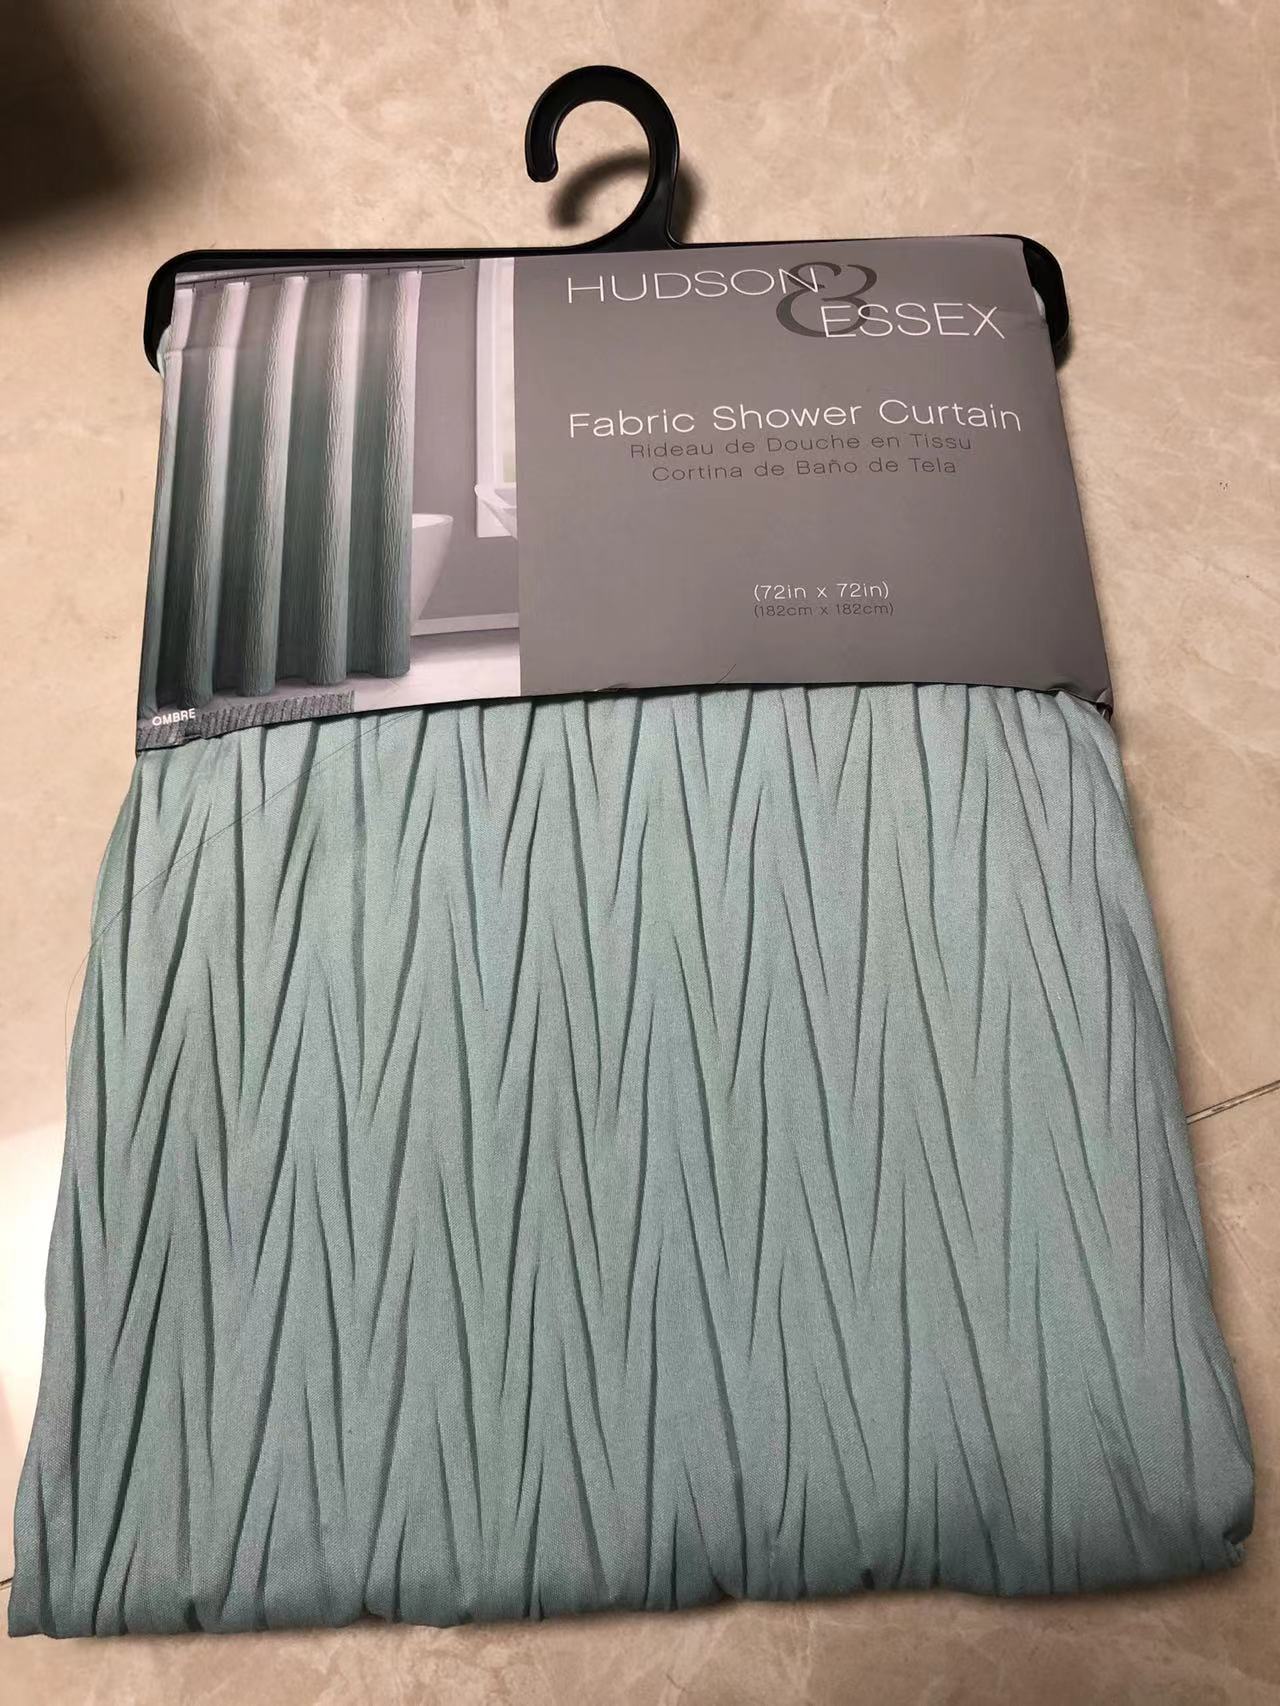 46441 - Fabric Shower Curtain China